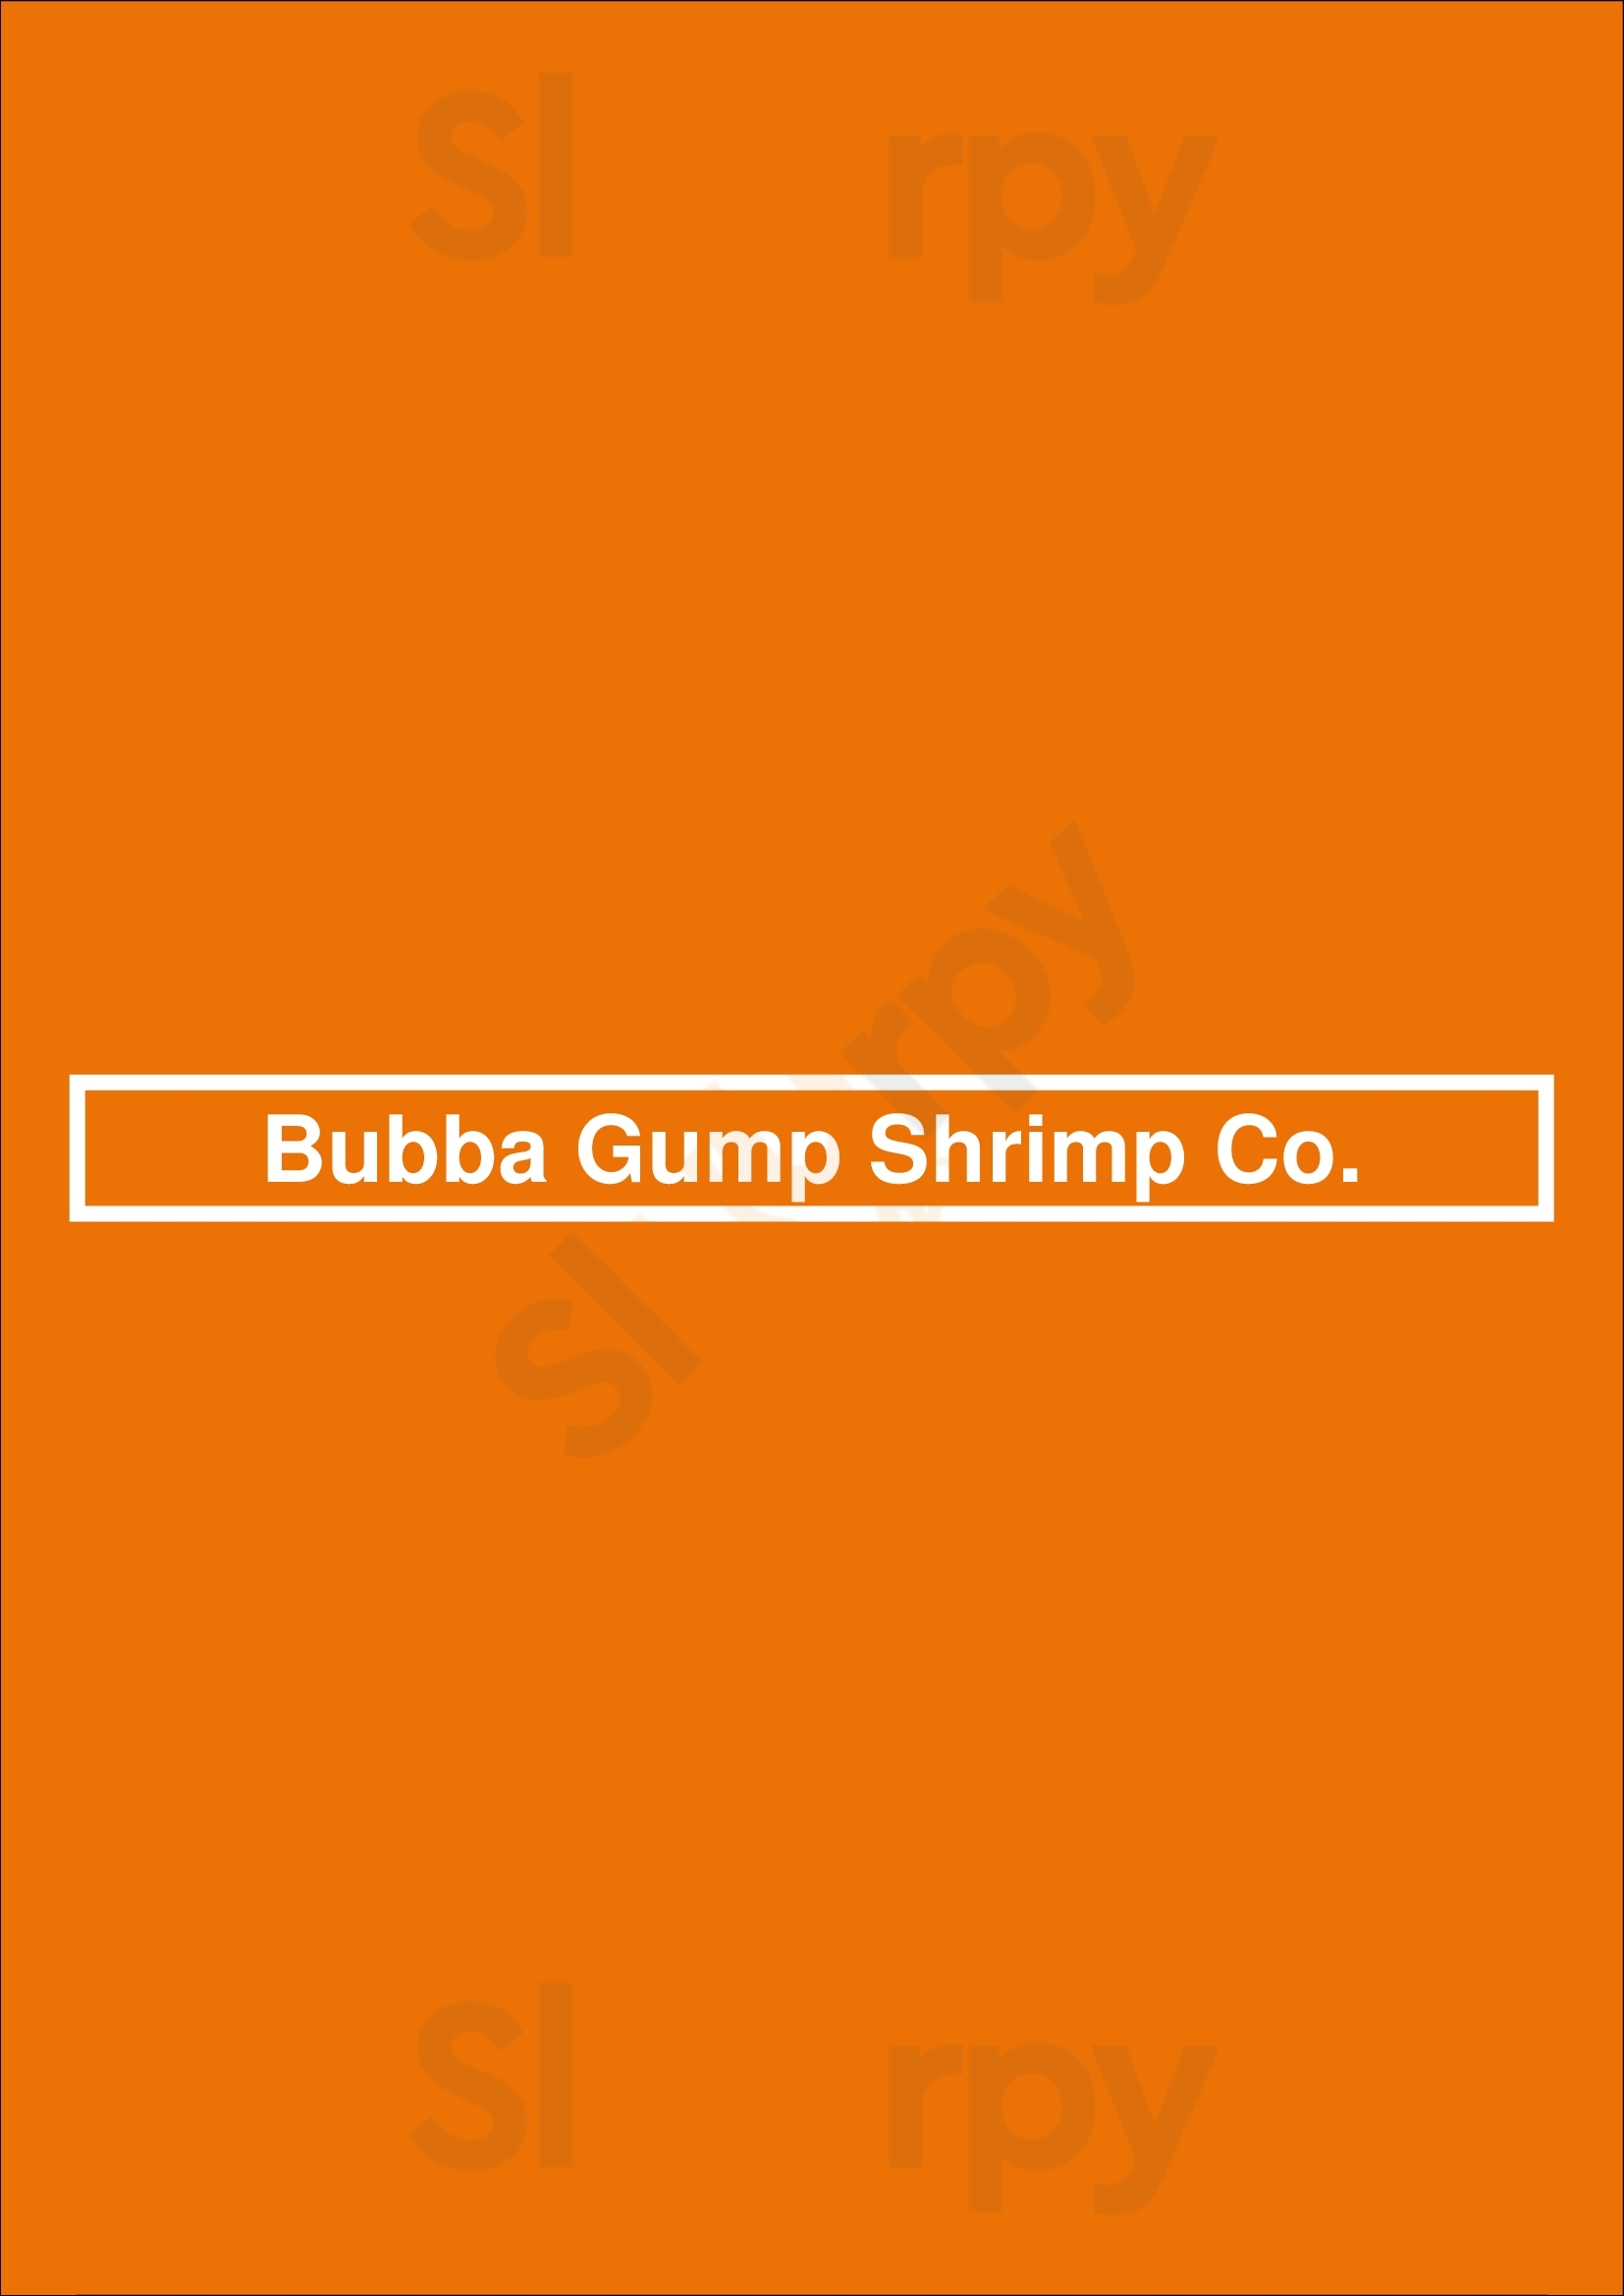 Bubba Gump Shrimp Co. Miami Menu - 1